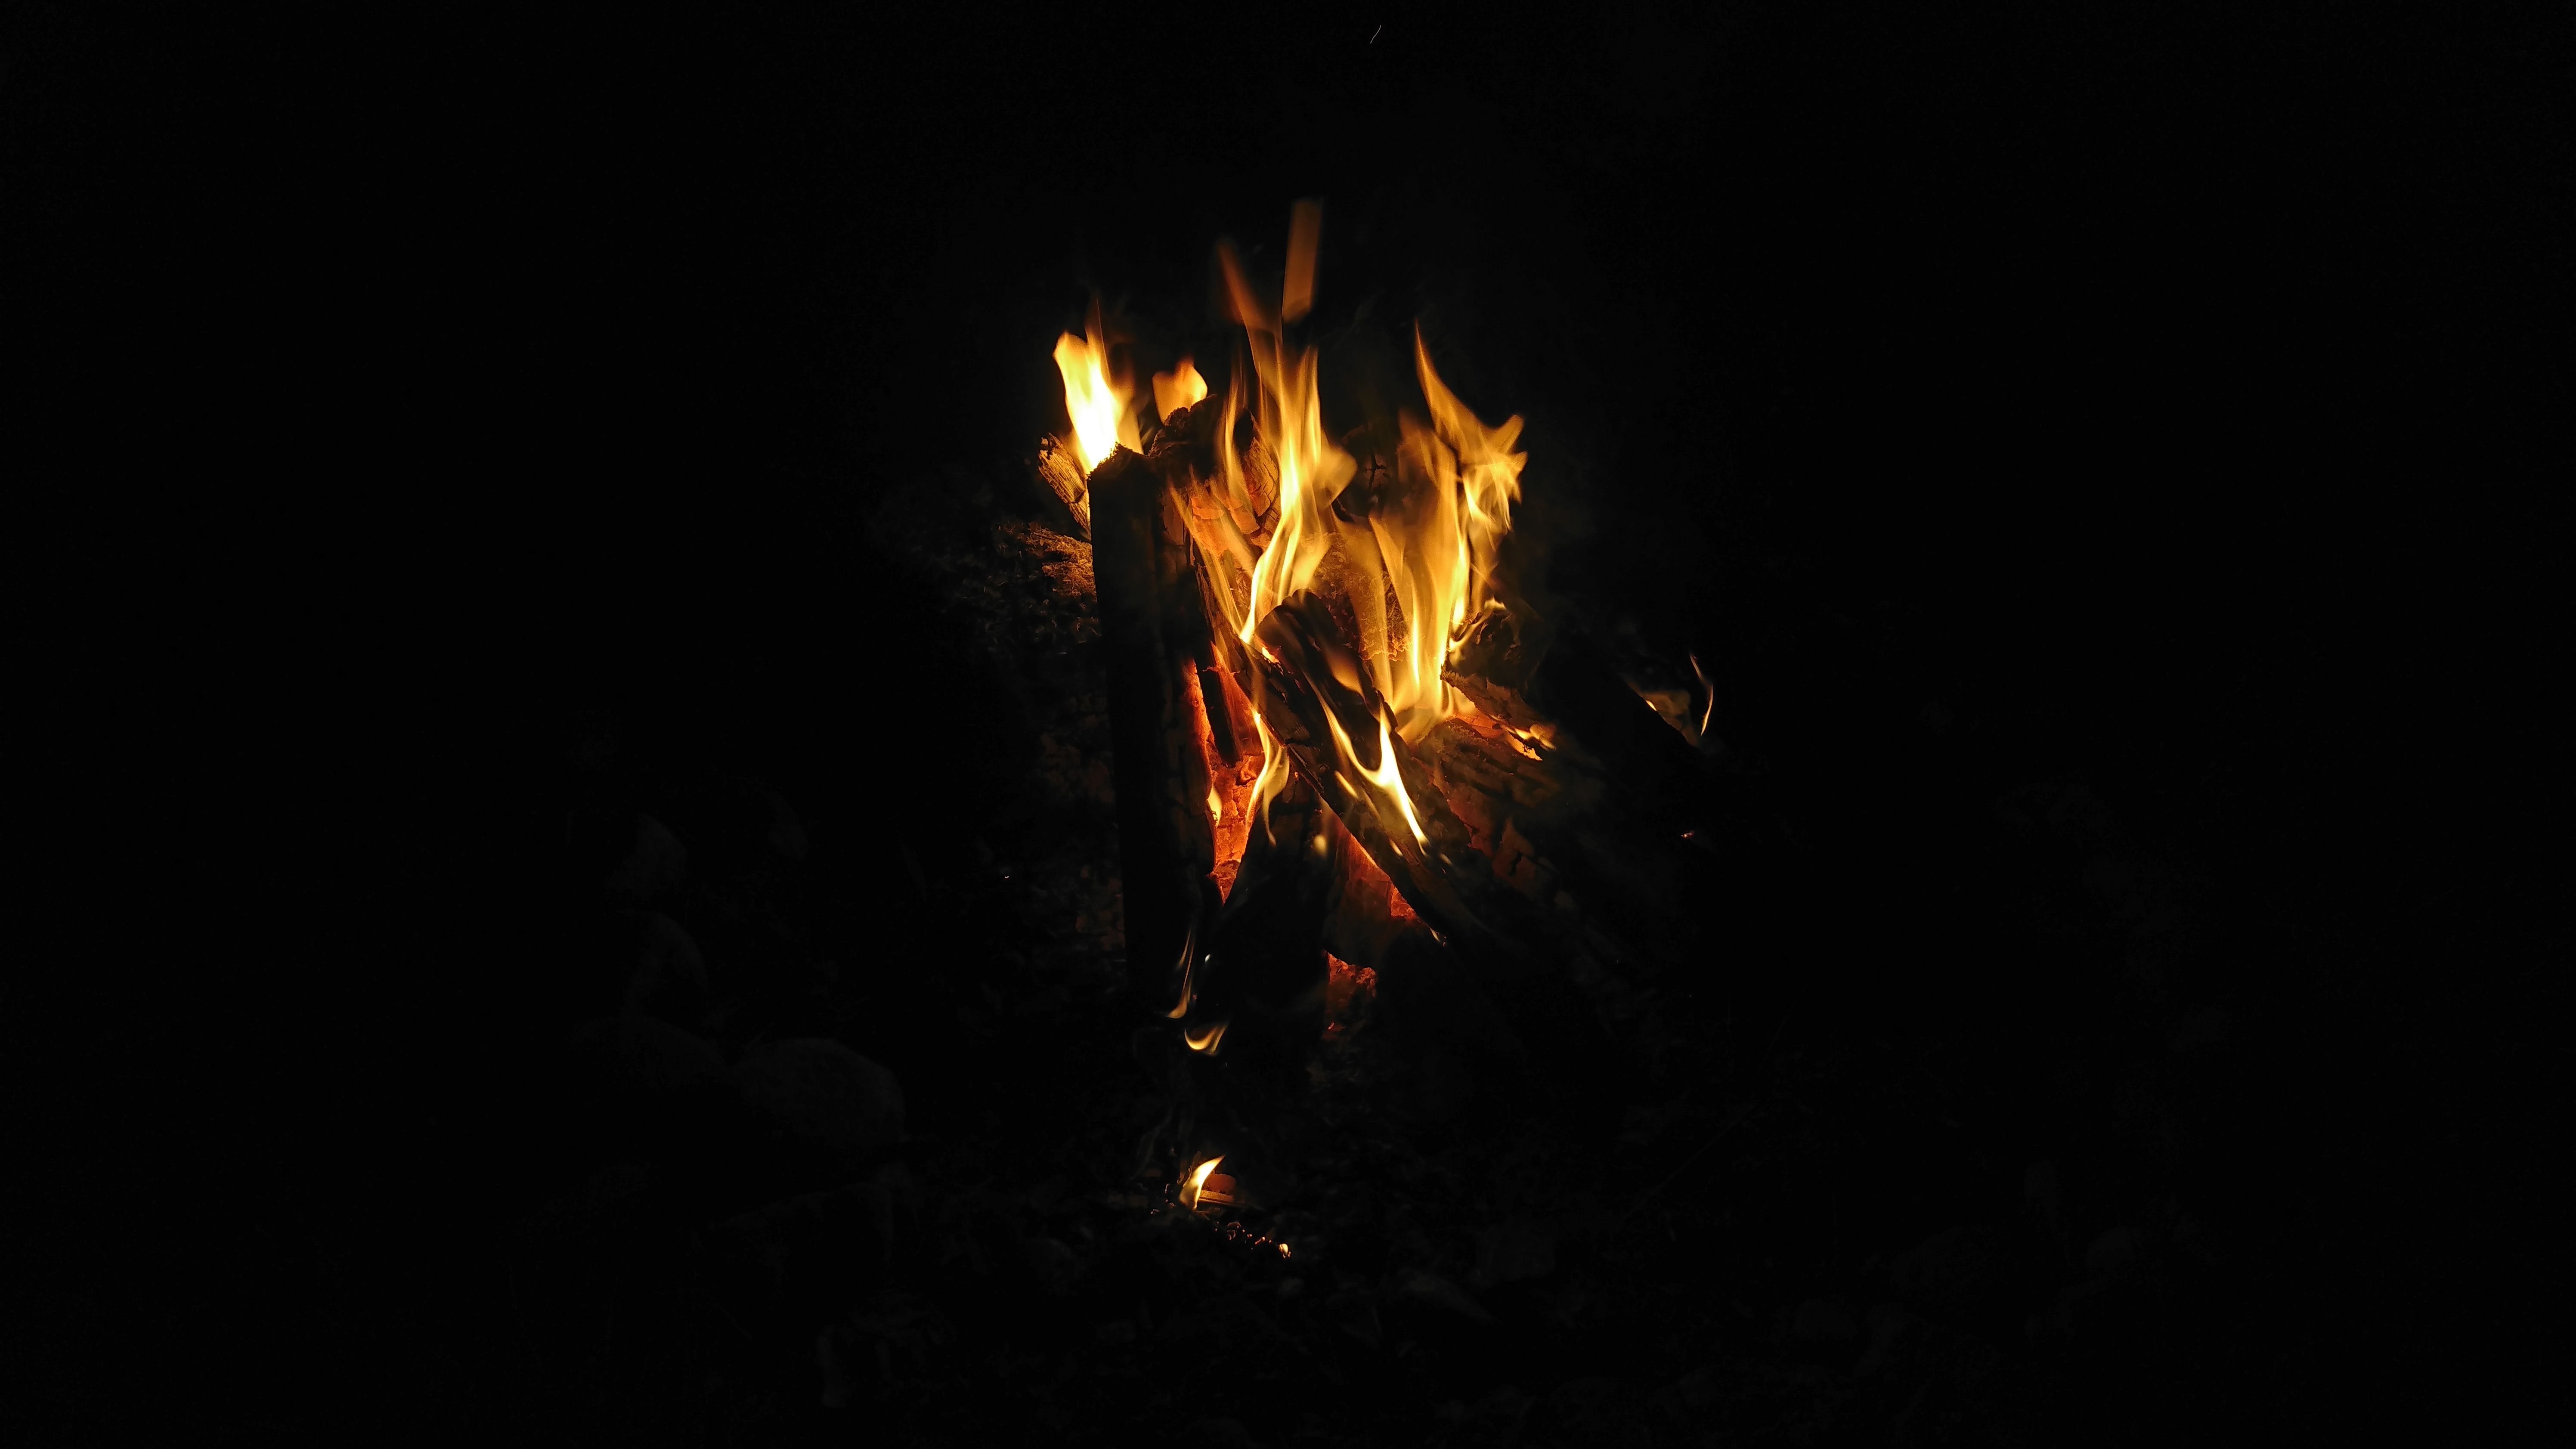 Night Dark Fire Bonfires 5984x3366